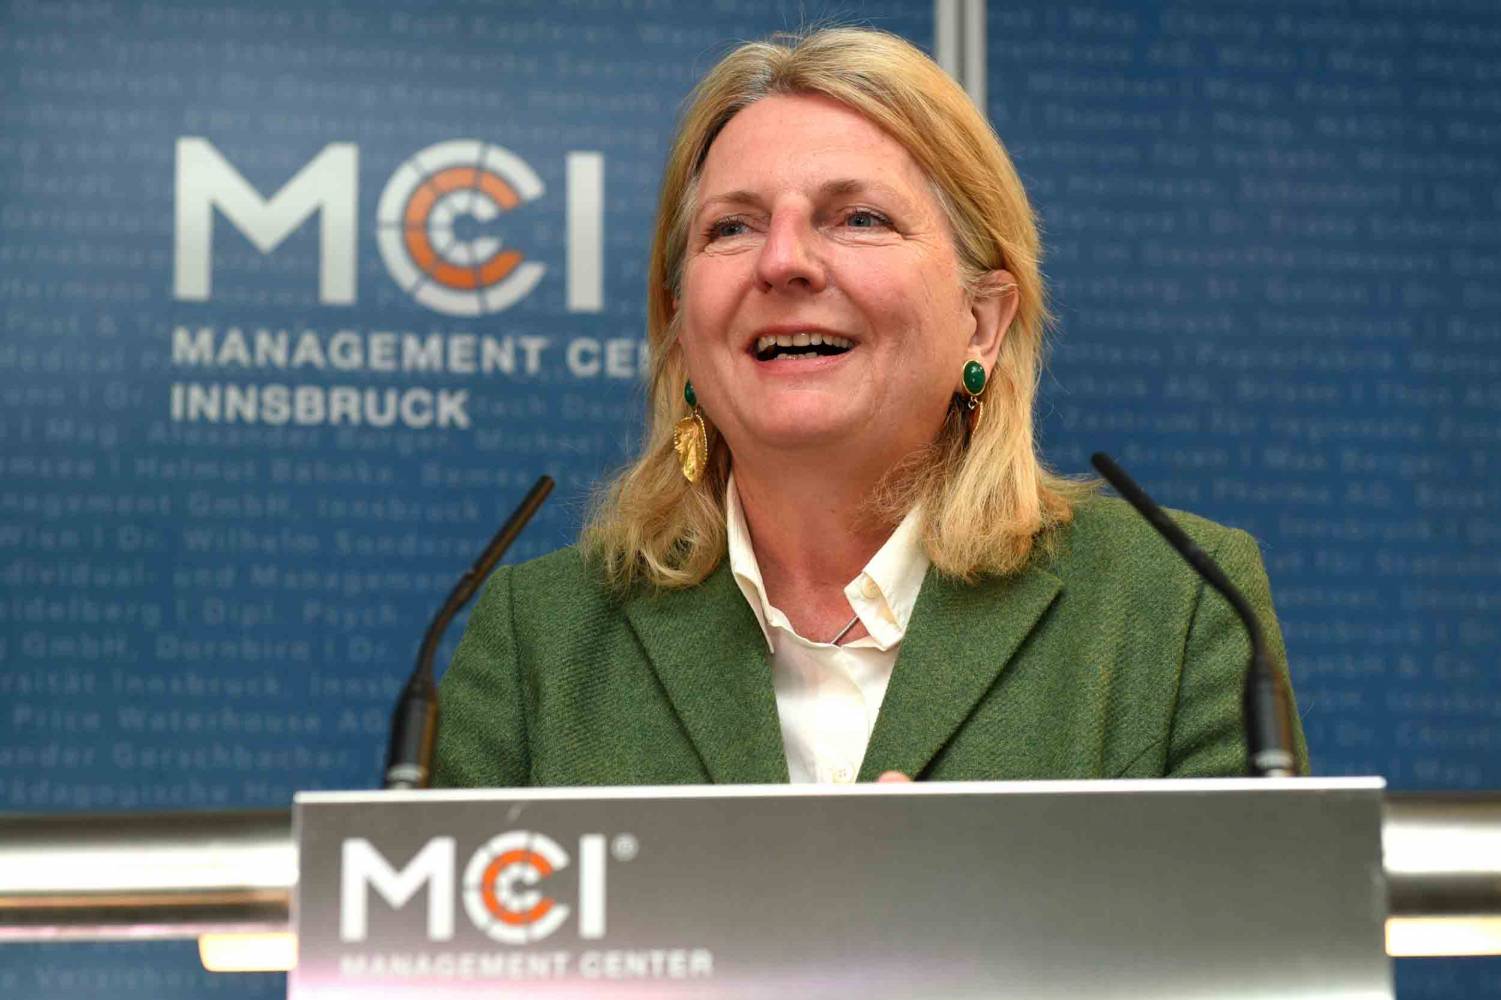 Foreign Minister Dr. Karin Kneissl during her speech.